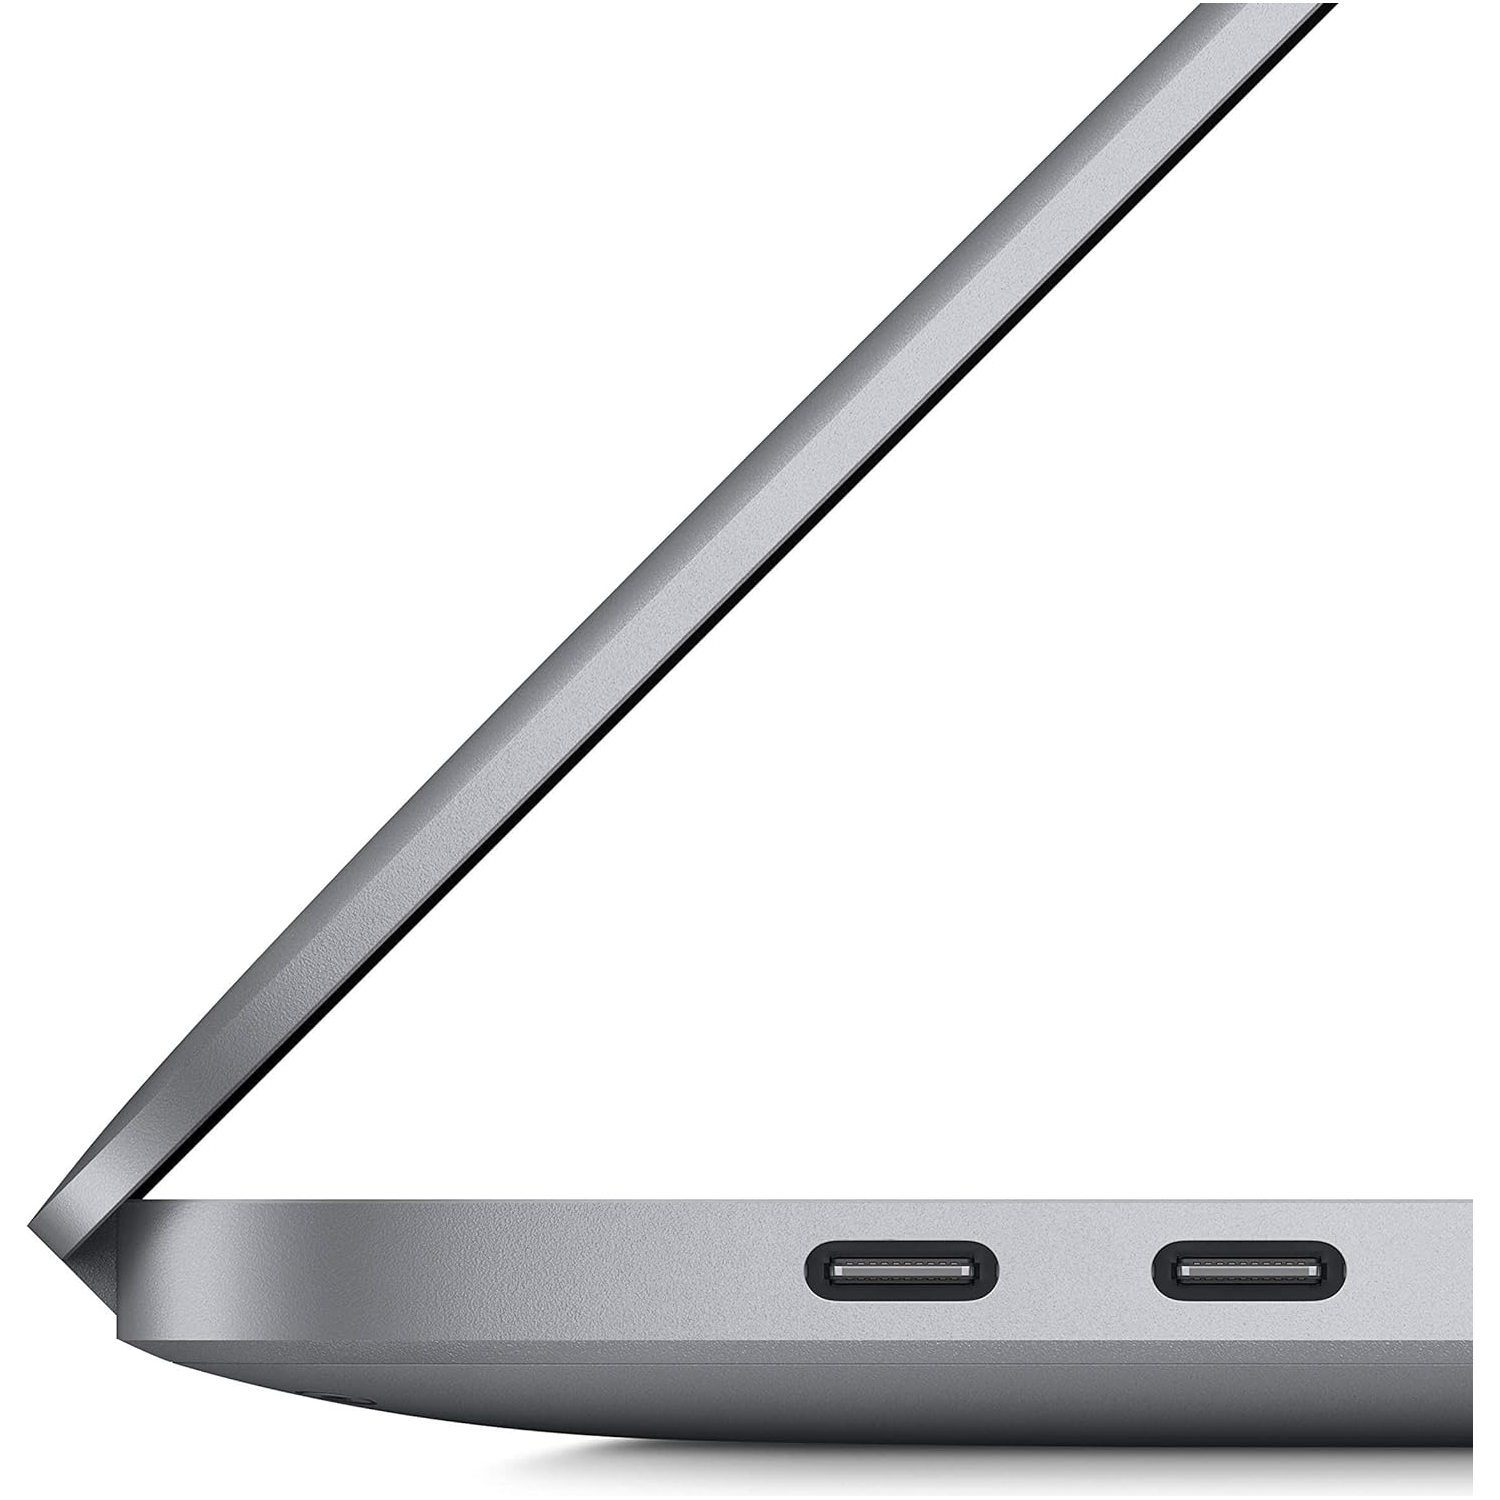 MacBook Pro 16-inch Laptop 2.6GHz 6-Core i7 16GB RAM 512GB SSD - Silver (2019)